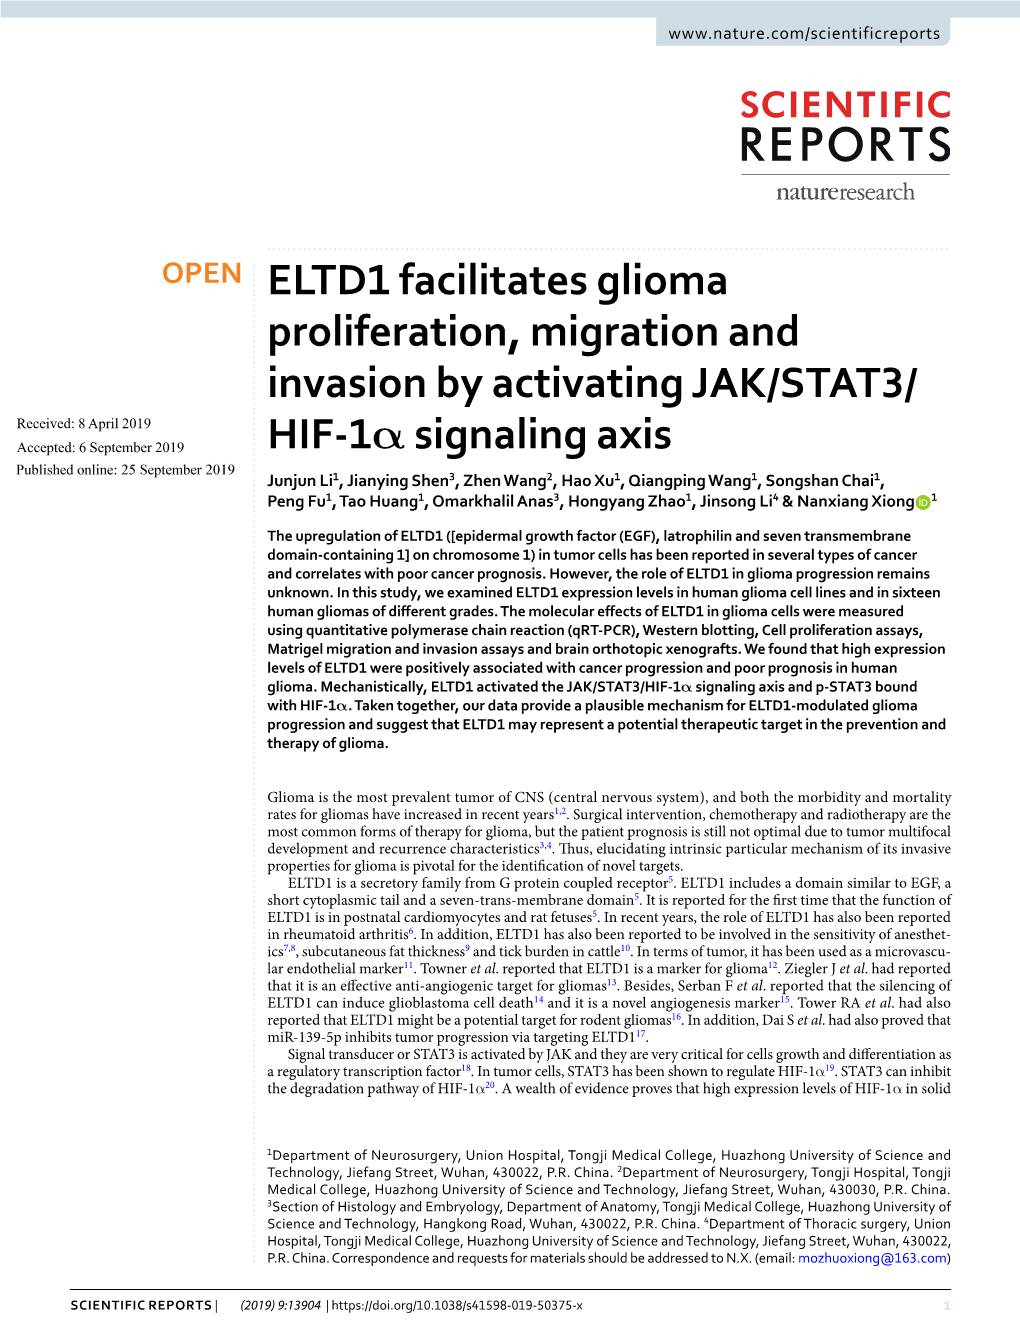 ELTD1 Facilitates Glioma Proliferation, Migration and Invasion by Activating